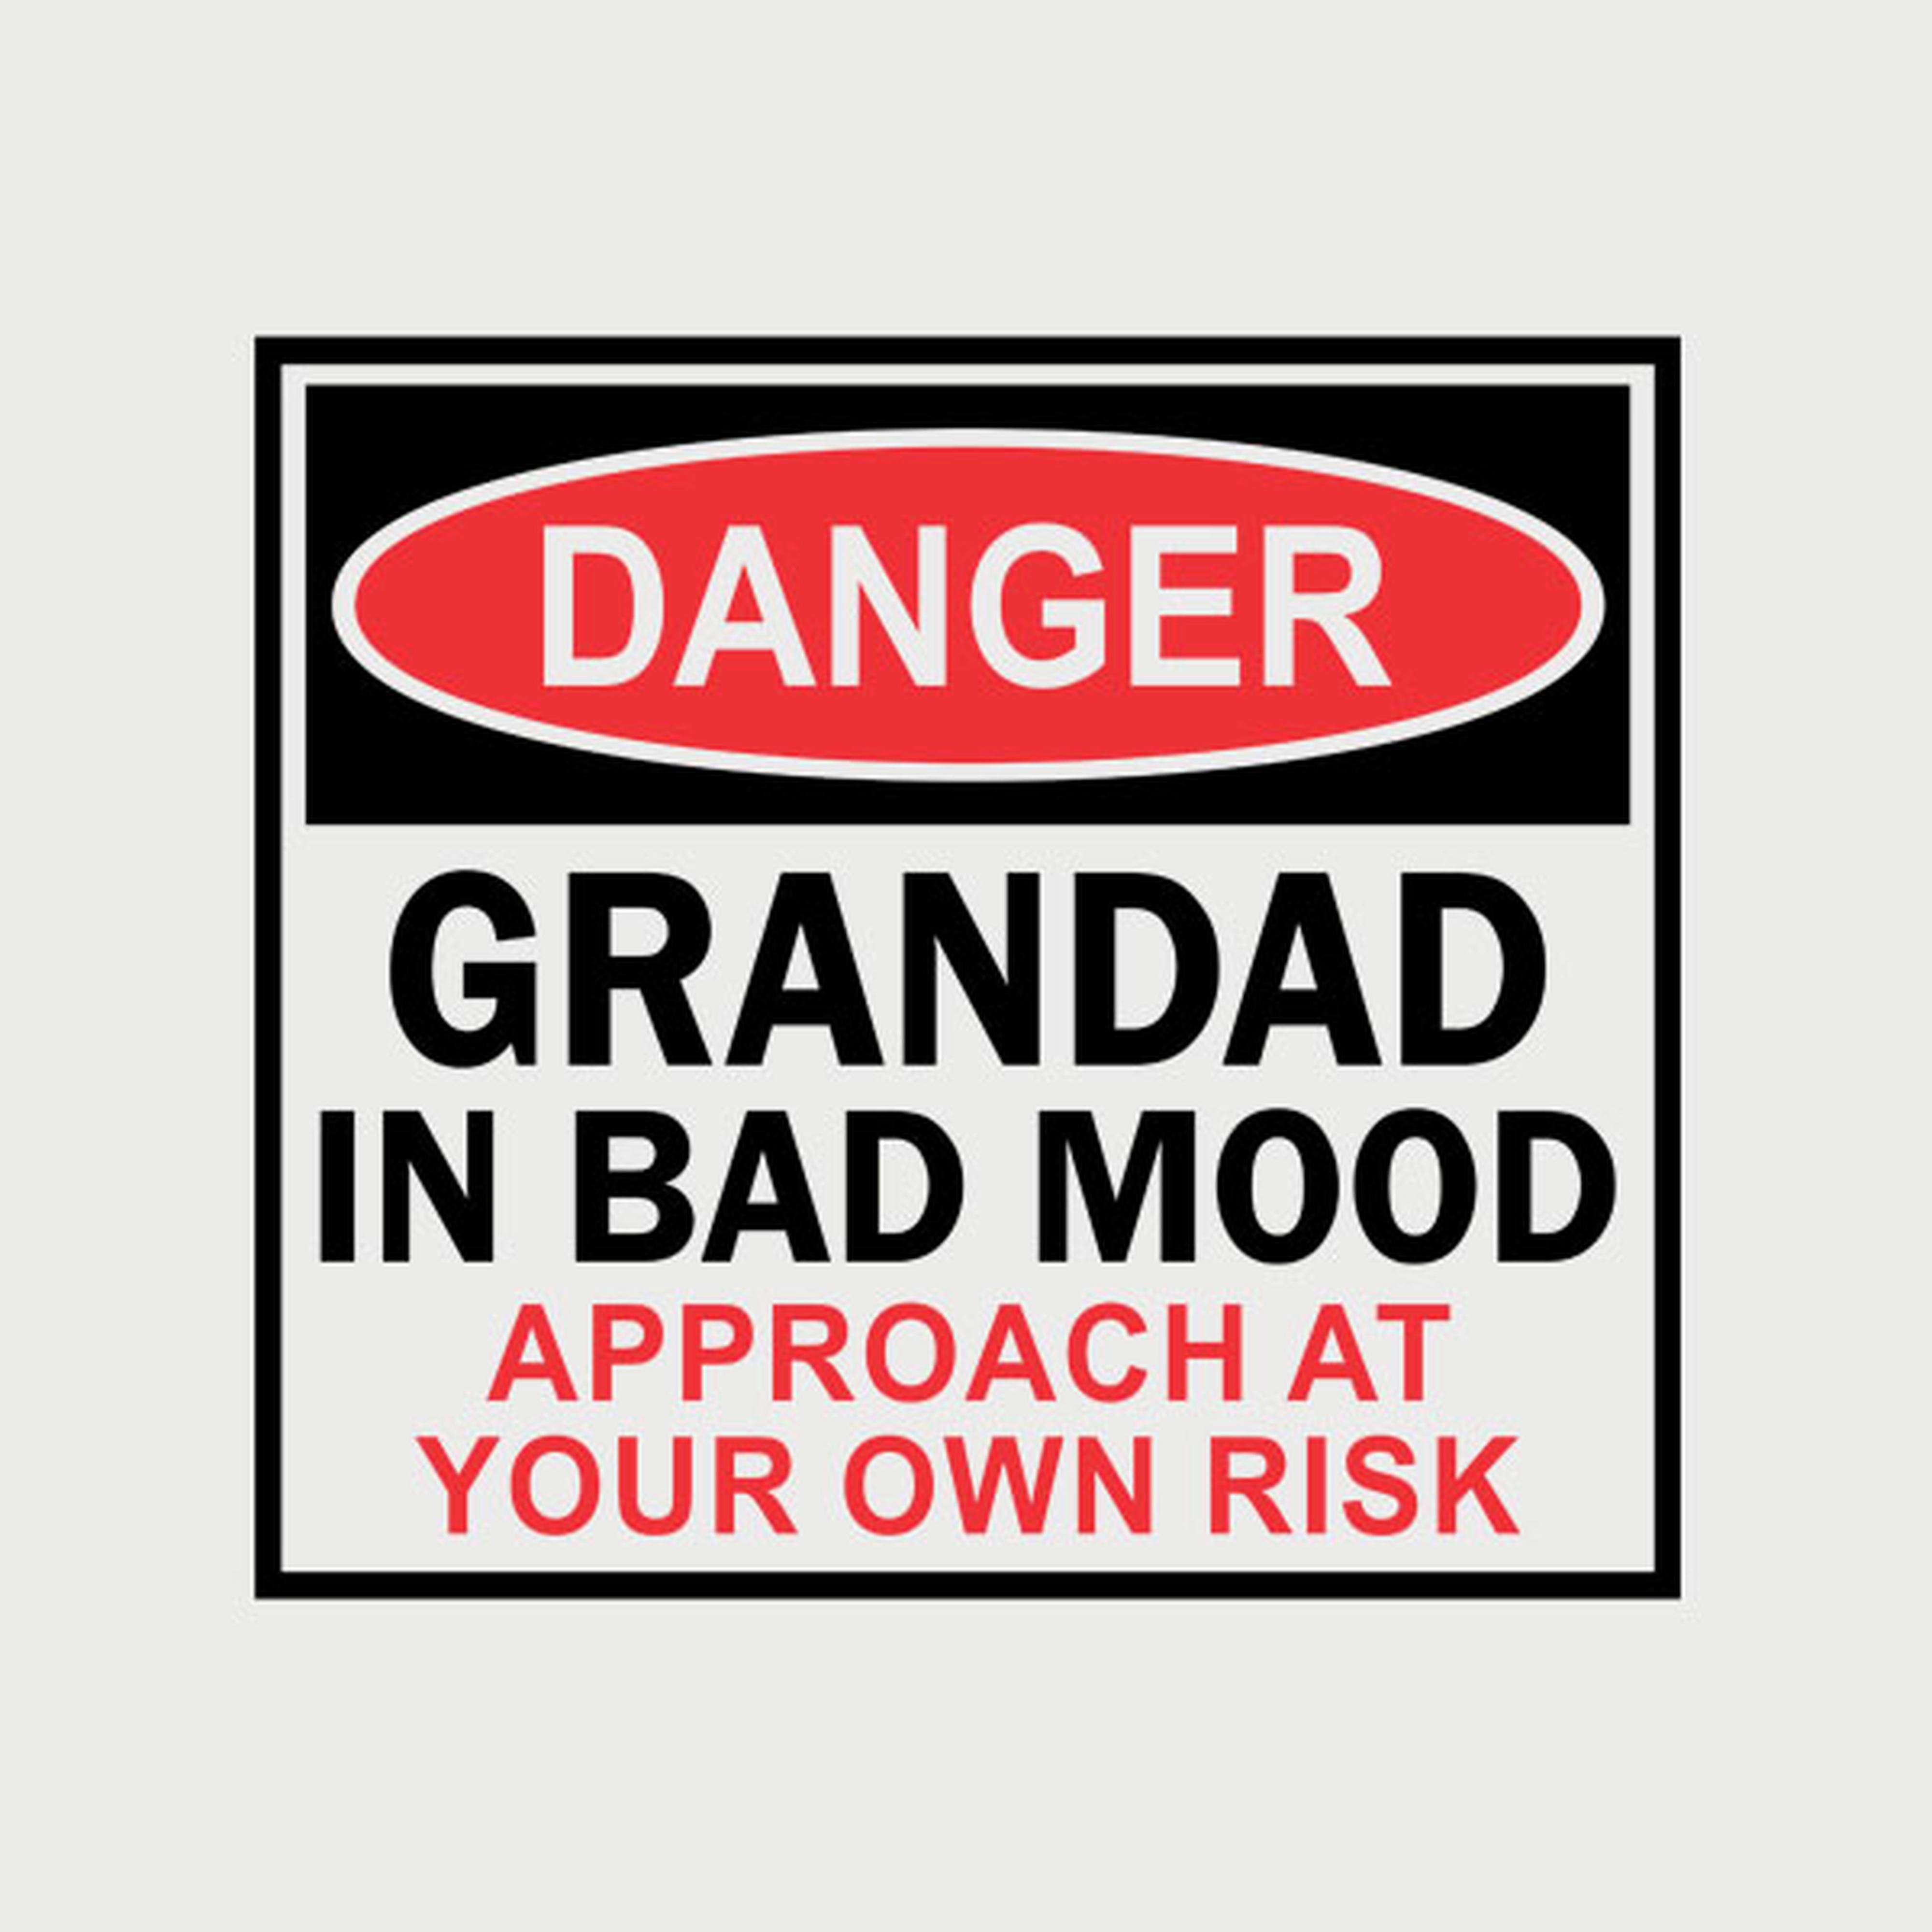 Grandad in bad mood